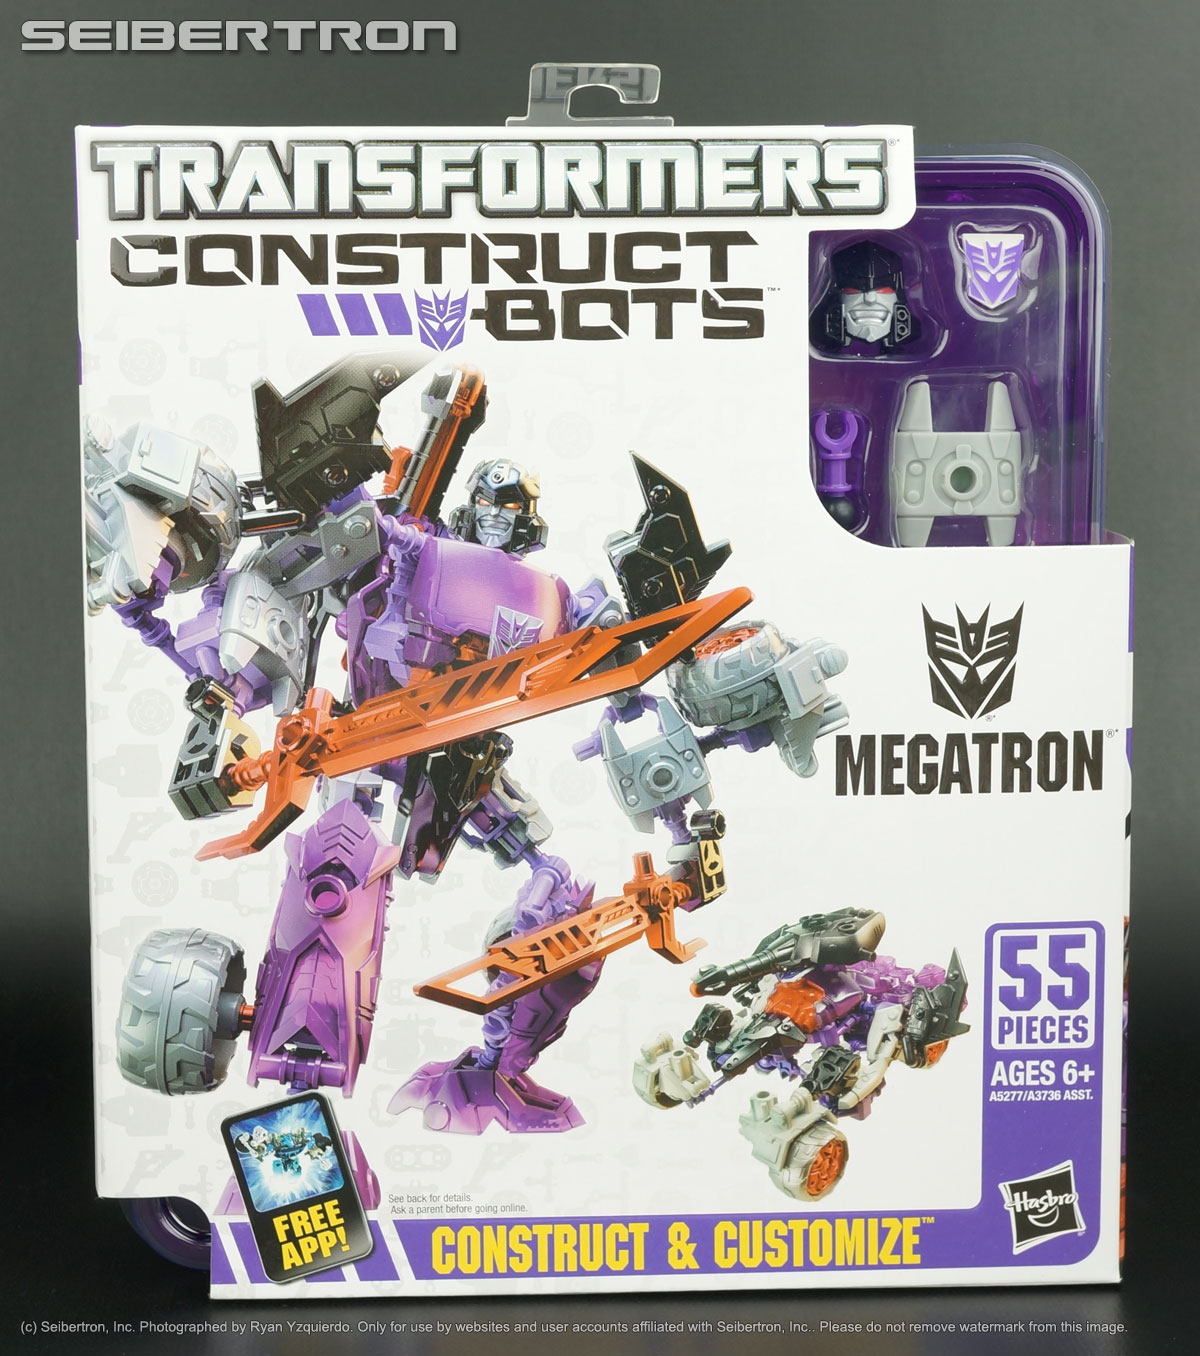 Construct-Bots MEGATRON Elite Class Transformers E1:05 G1 Hasbro New 2013